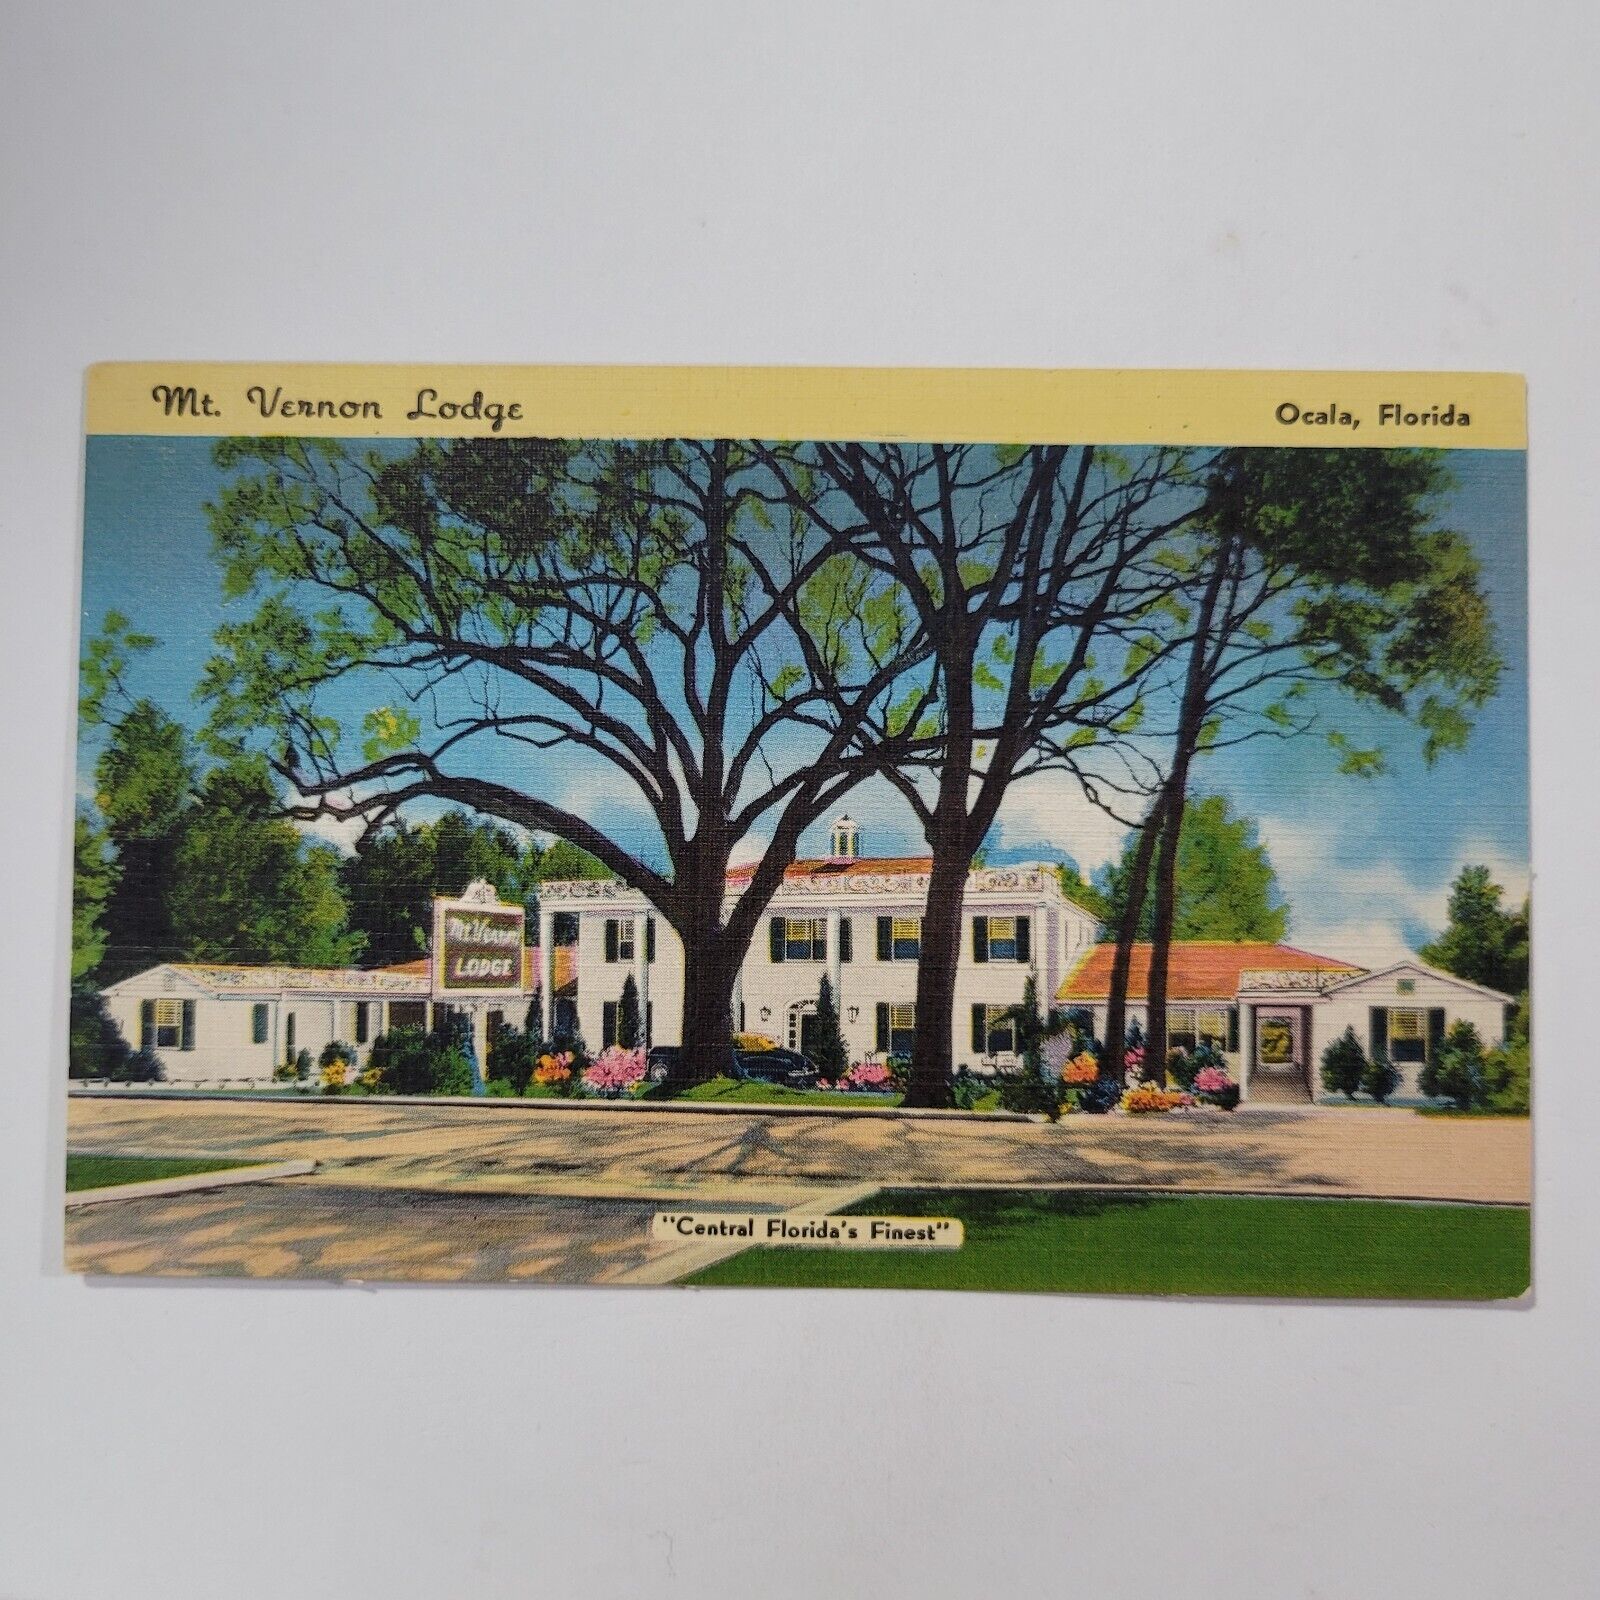 Mt. Vernon Lodge Ocala Florida Central Florida\'s Finest Vintage Linen Postcard